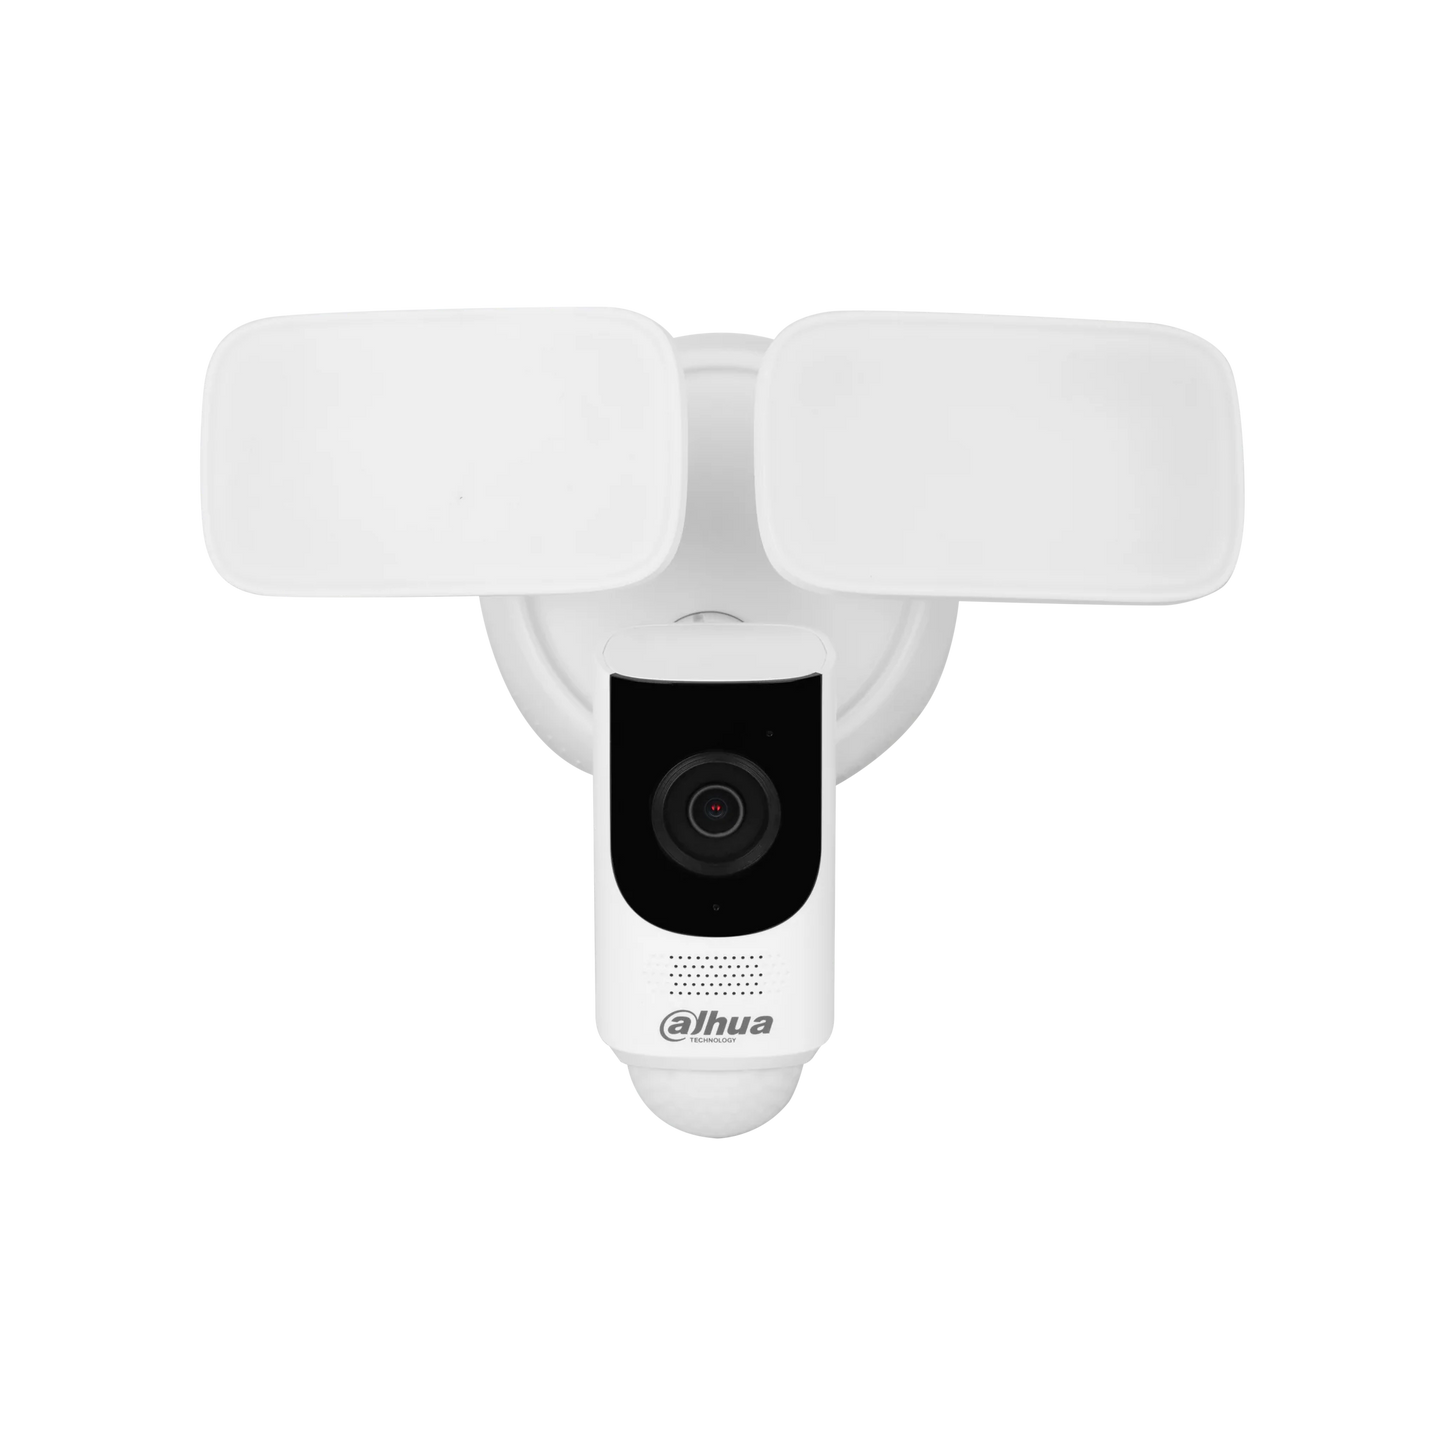 Dahua 4MP Wi-Fi Fixed-focal Floodlight Network Camera